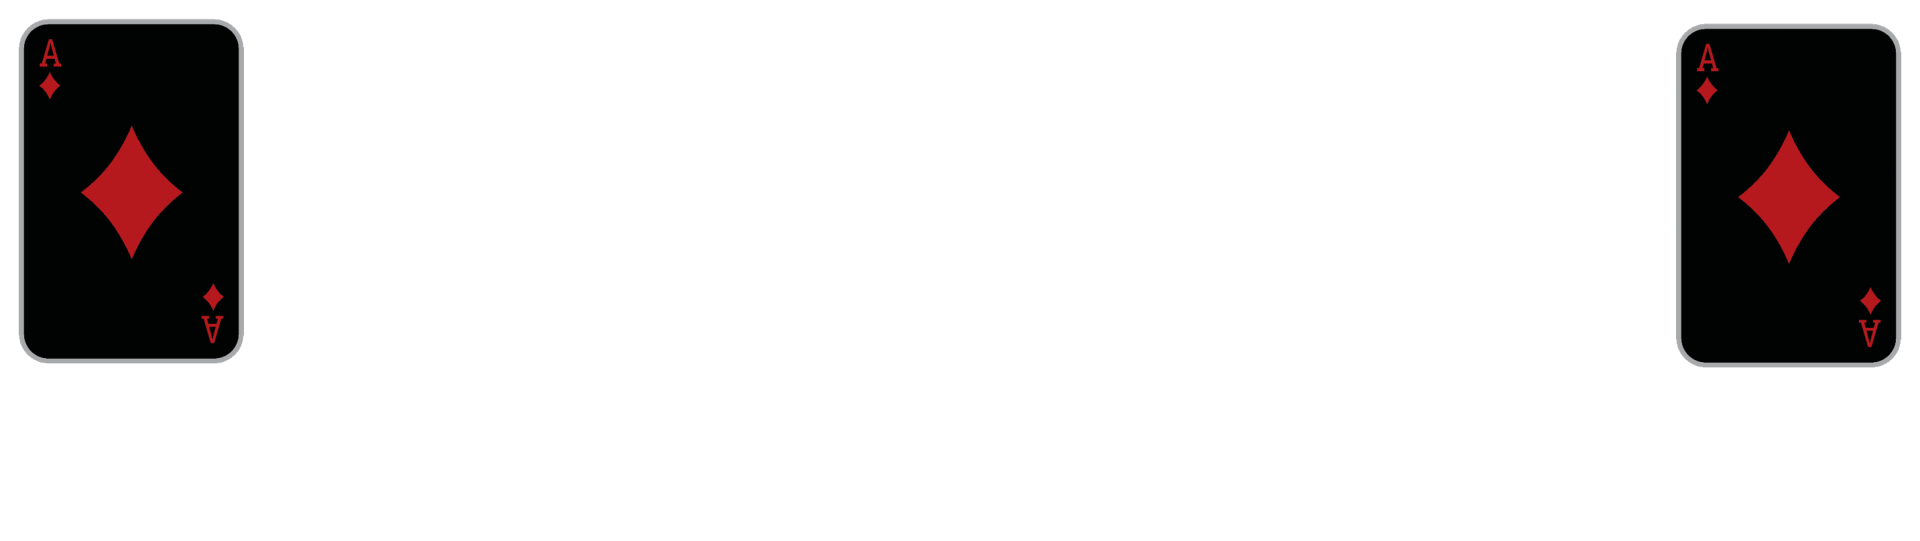 ACE of Diamonds Concrete Drilling & Cutting Logo